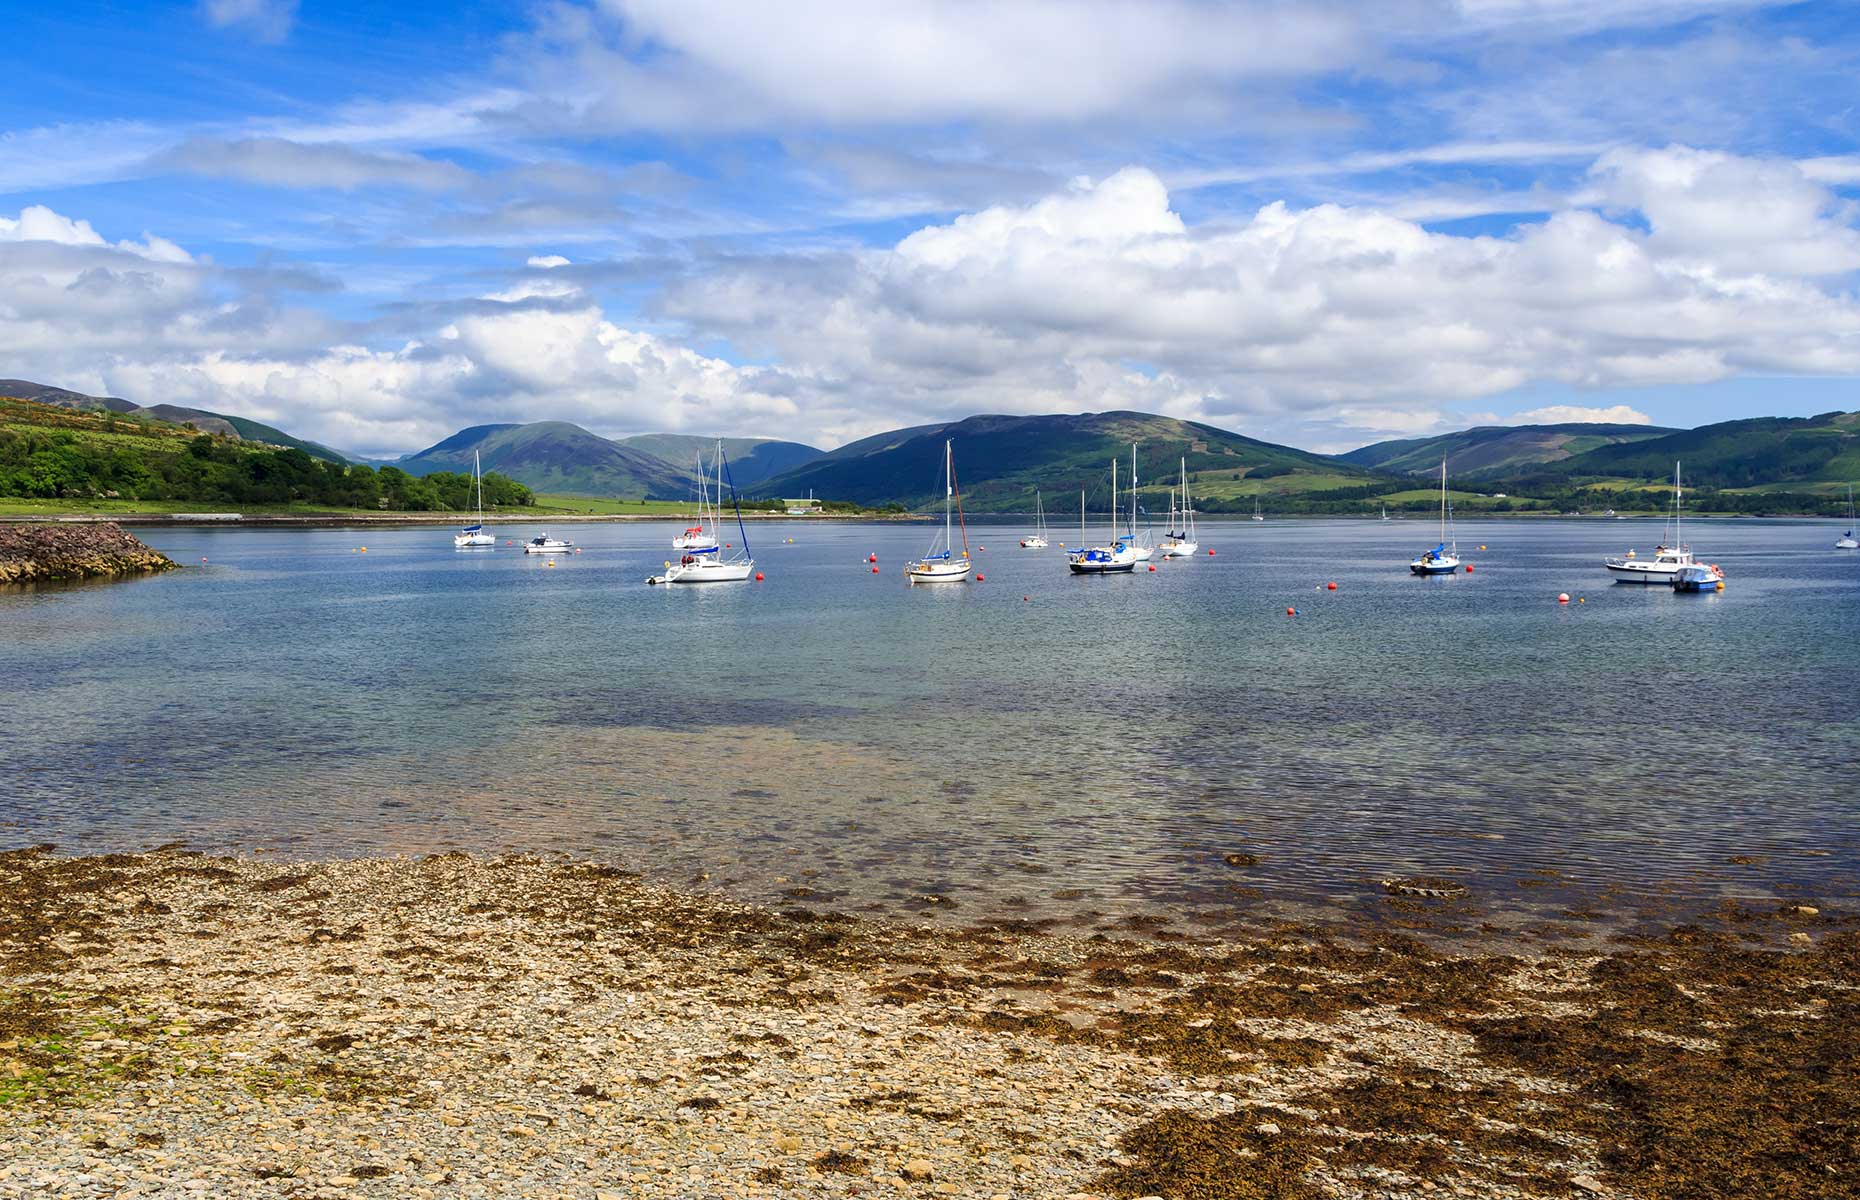 Port Bannatyne, Isle of Bute, Scotland (Image: ian woolcock/Shutterstock)